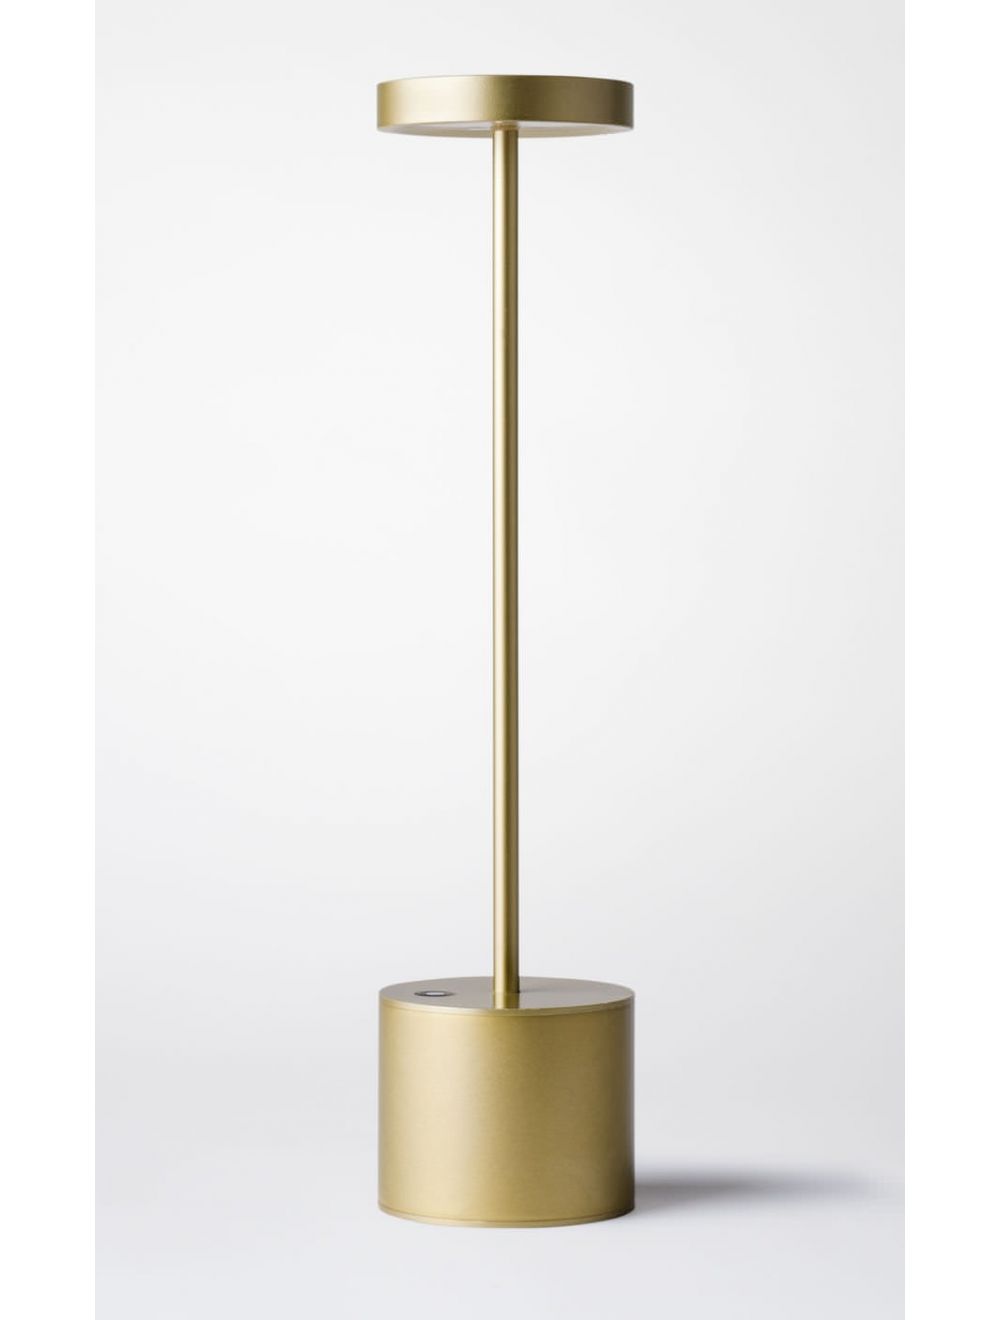 Shop Luxciole Table Online. Lamp by Hisle | Sedie.Design®